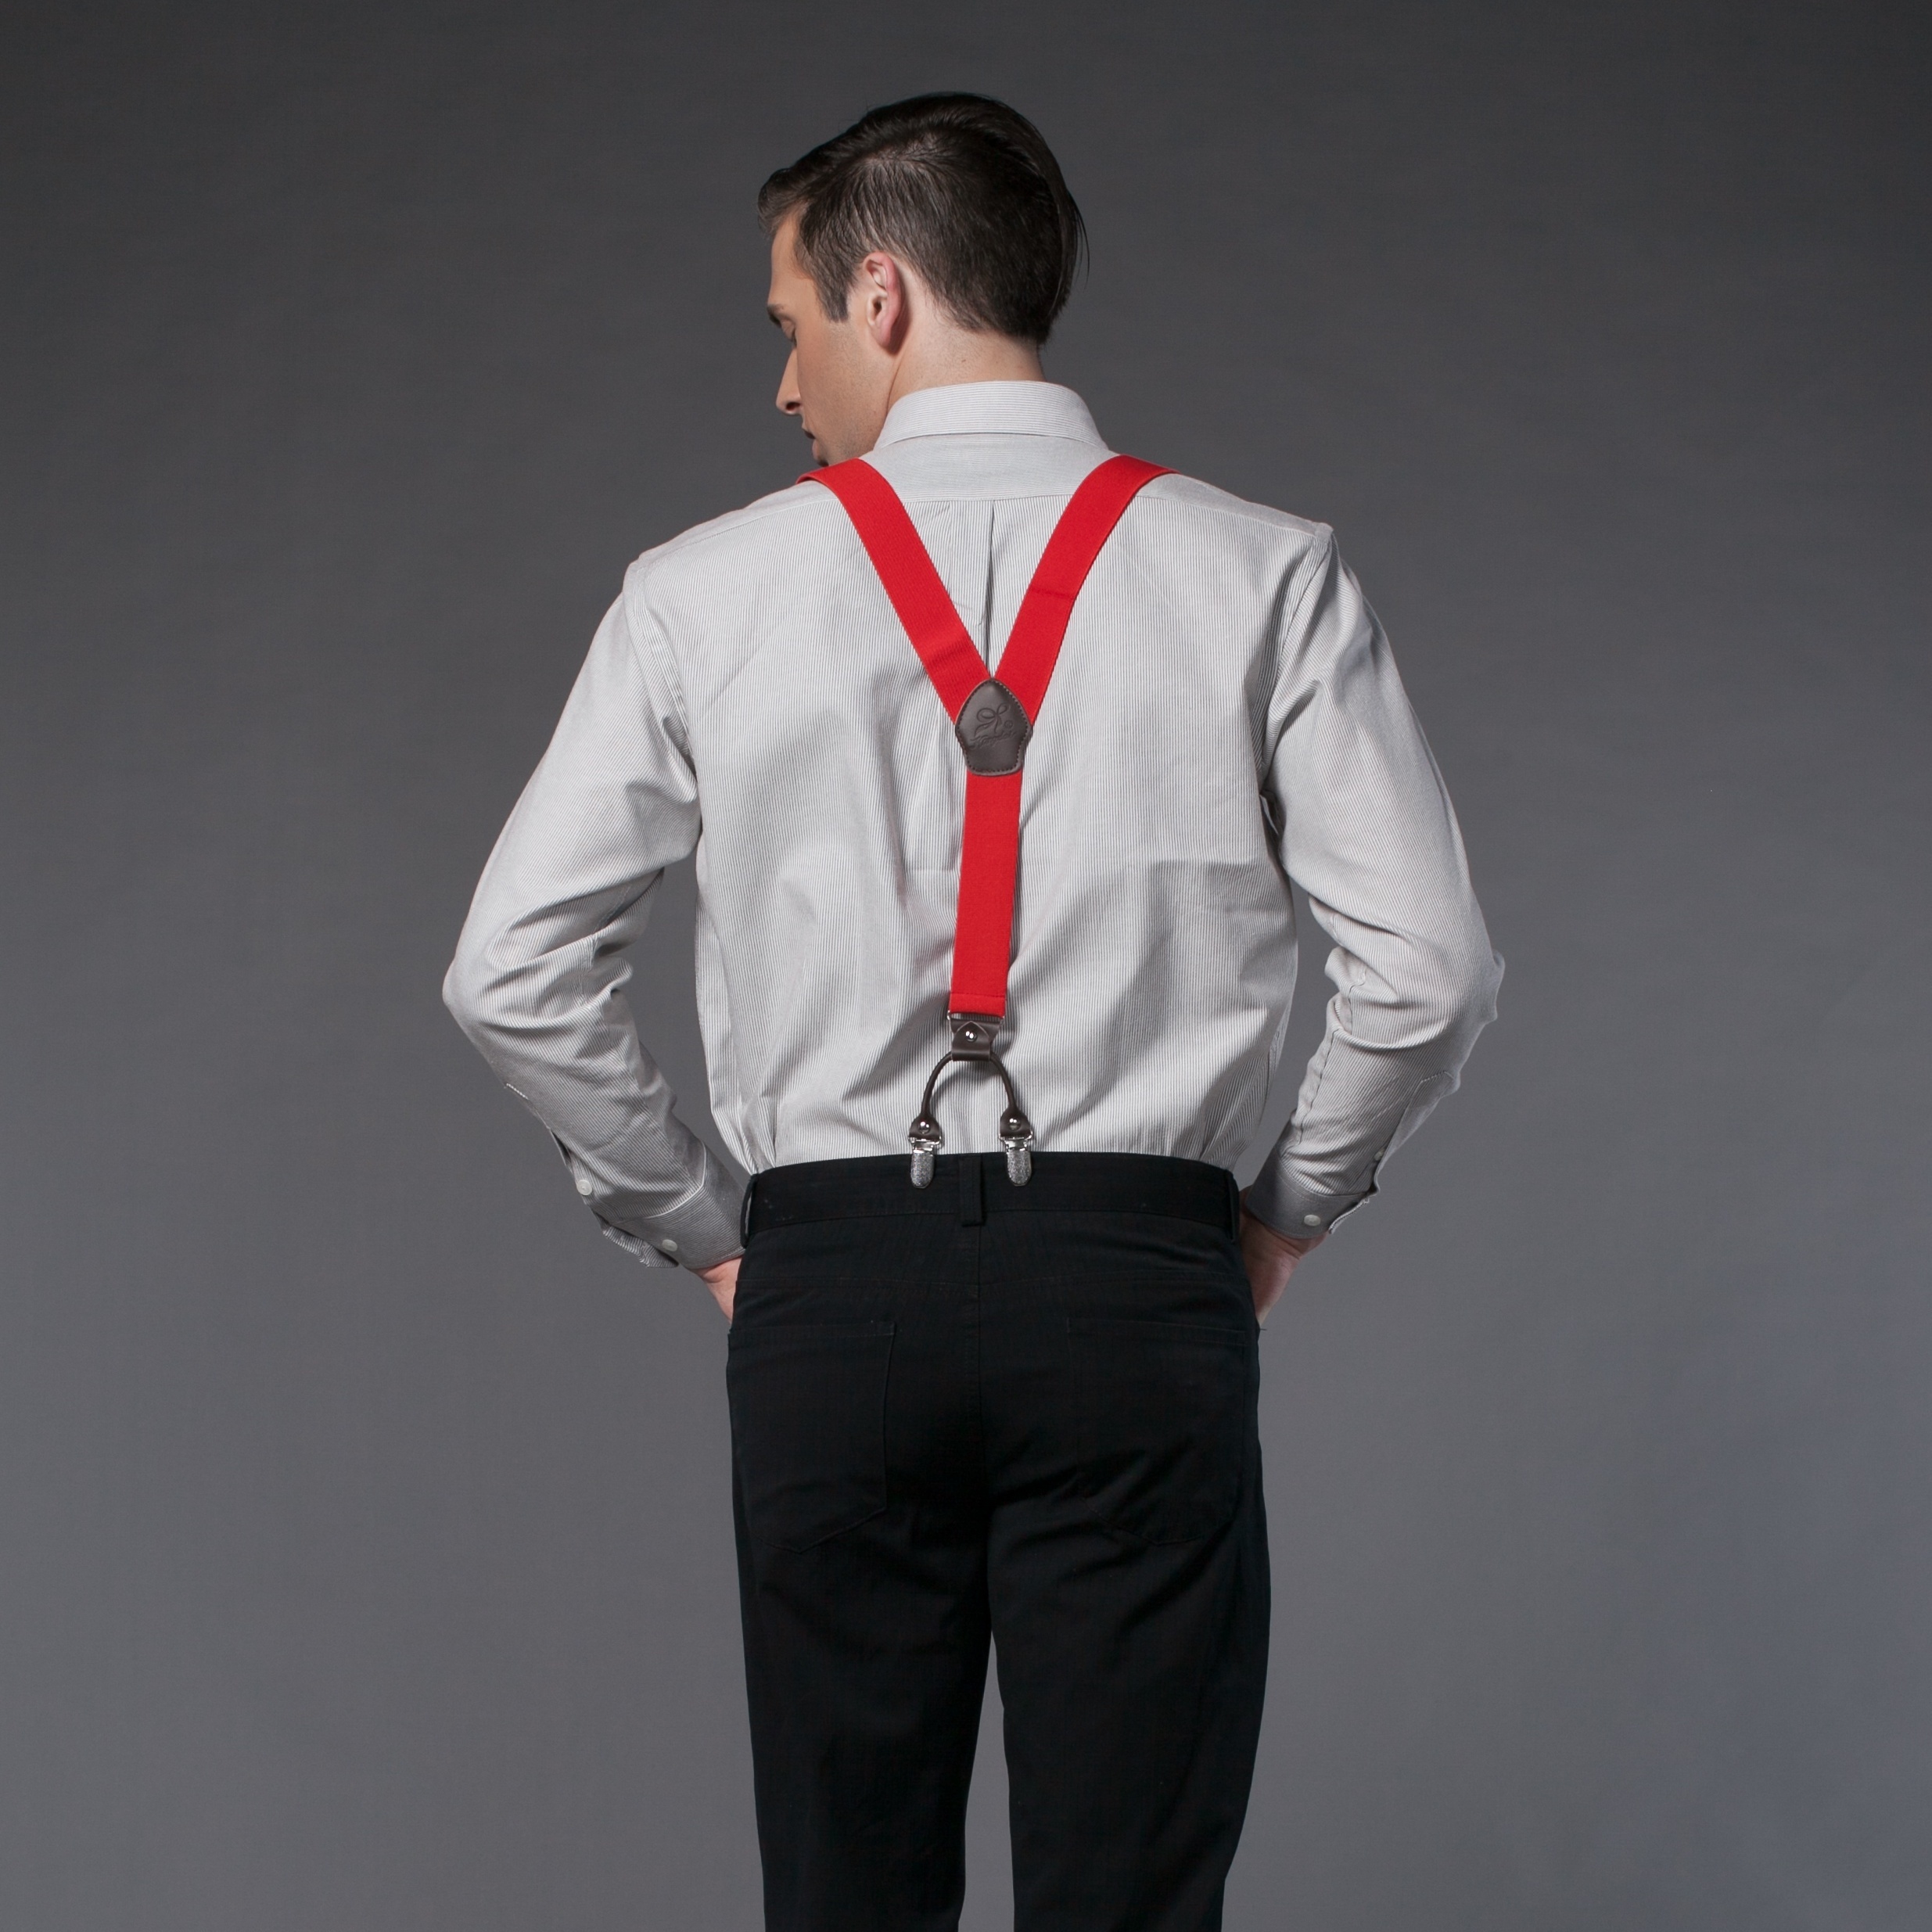 MENDENG Men Y Back Suspenders Bronze Swivel Snap Hooks Braces for Wedding  Party